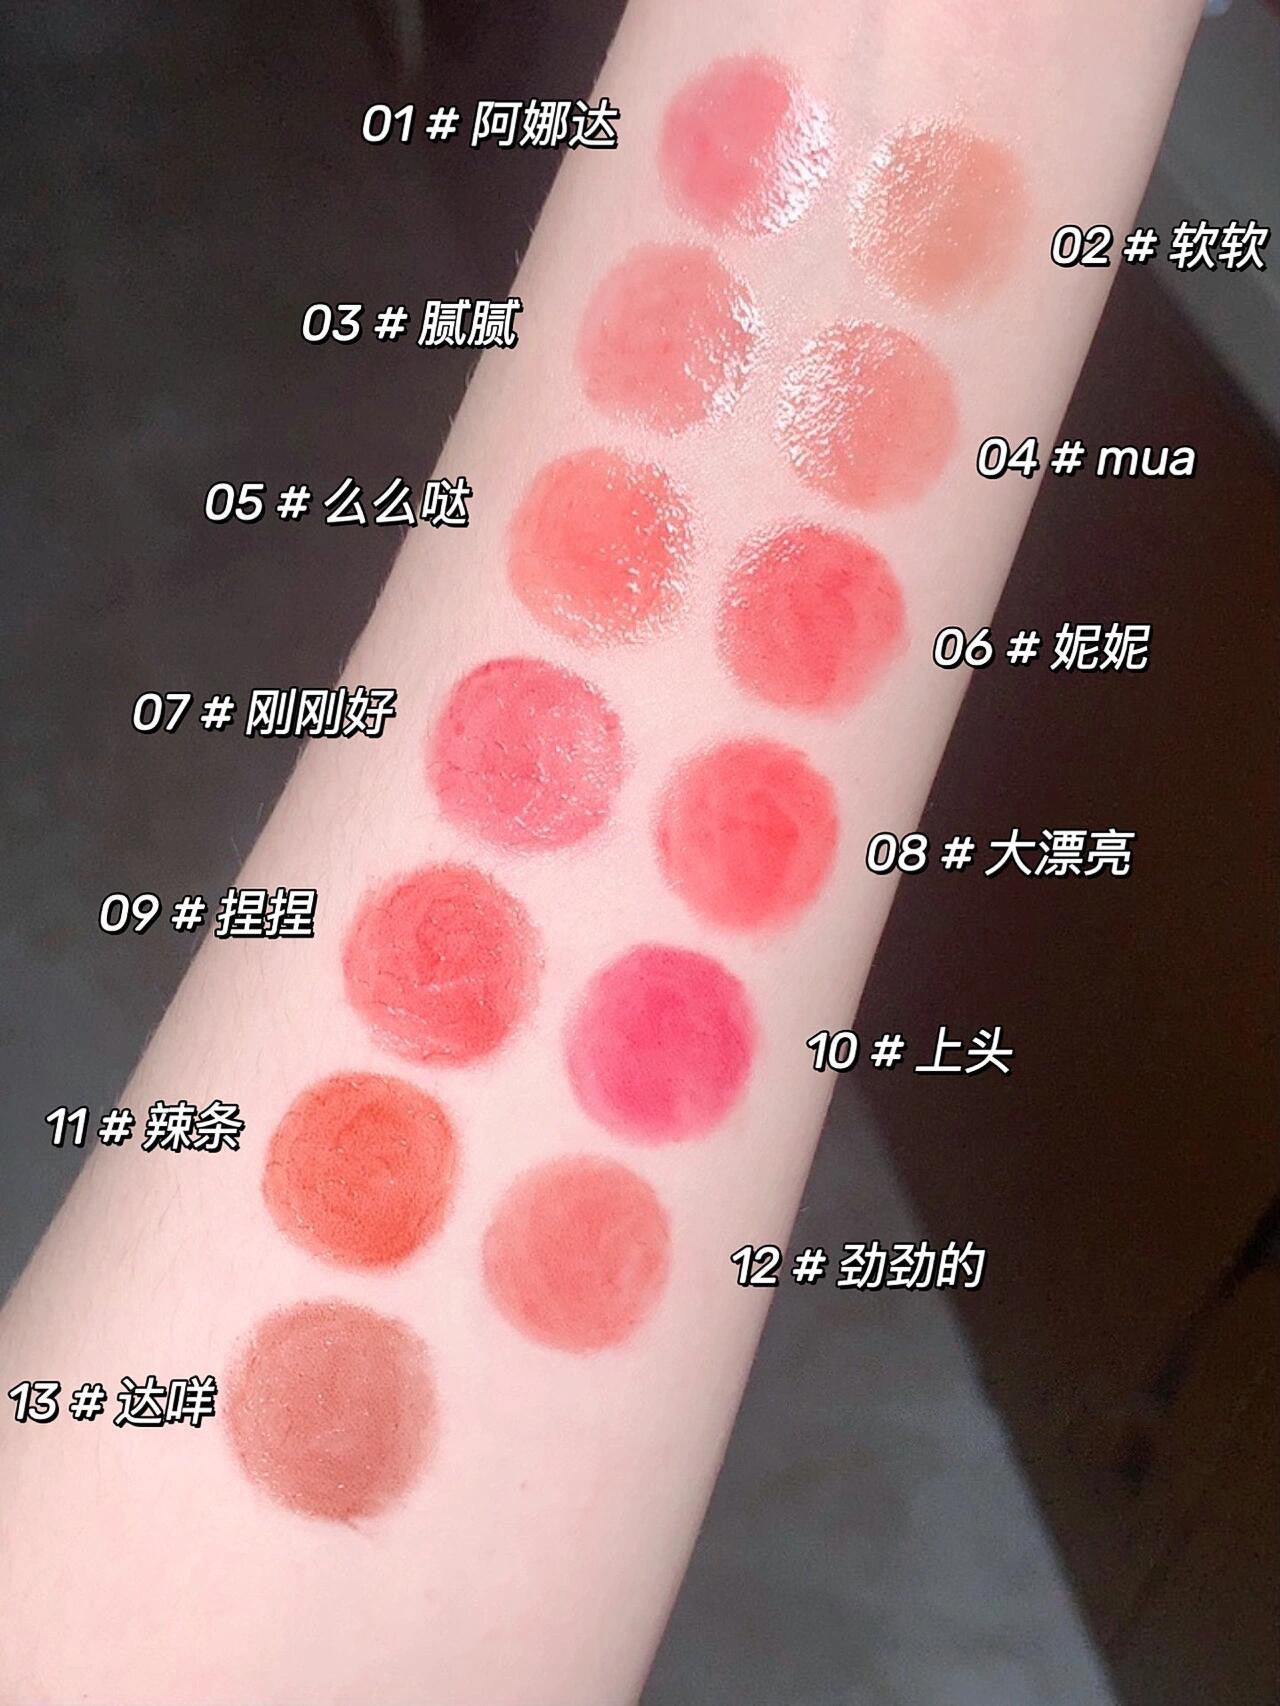 Flortte Heart Shape Beauty Chu Jelly Lipstick 1.4g 花洛莉亚果冻初吻棒